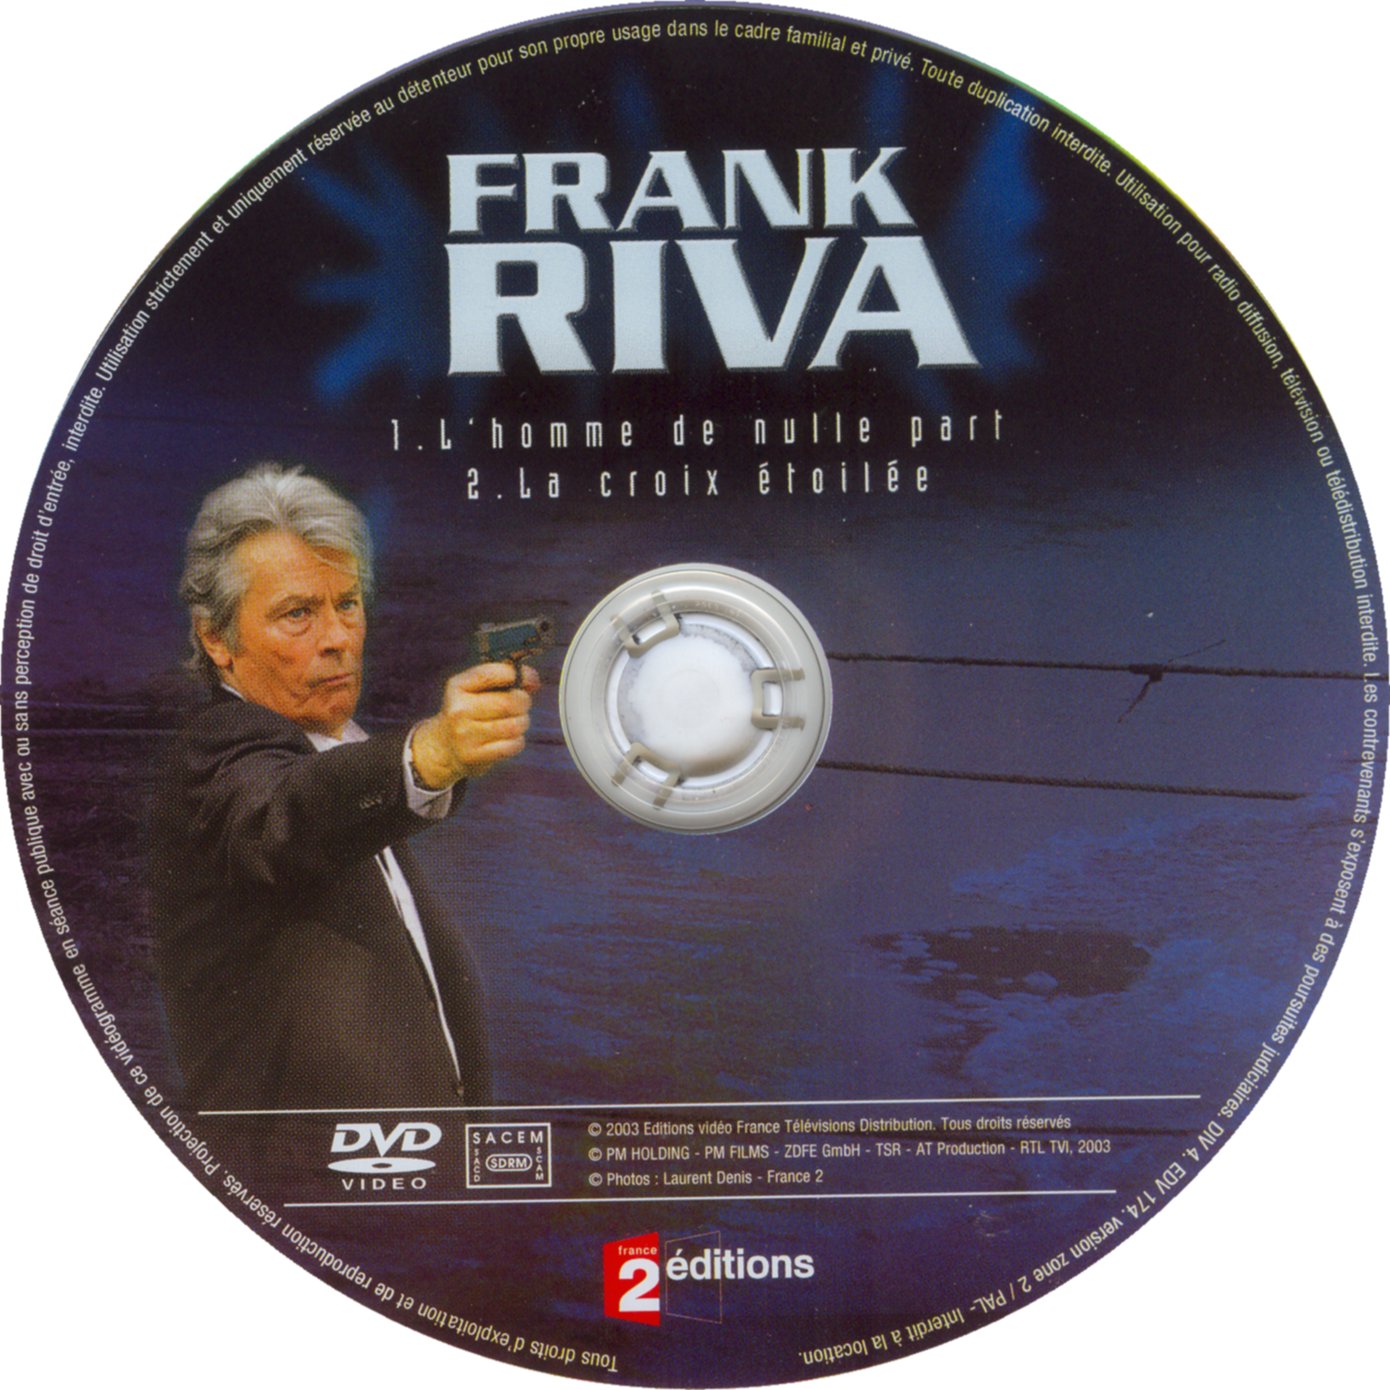 Frank Riva saison 1 DVD 1